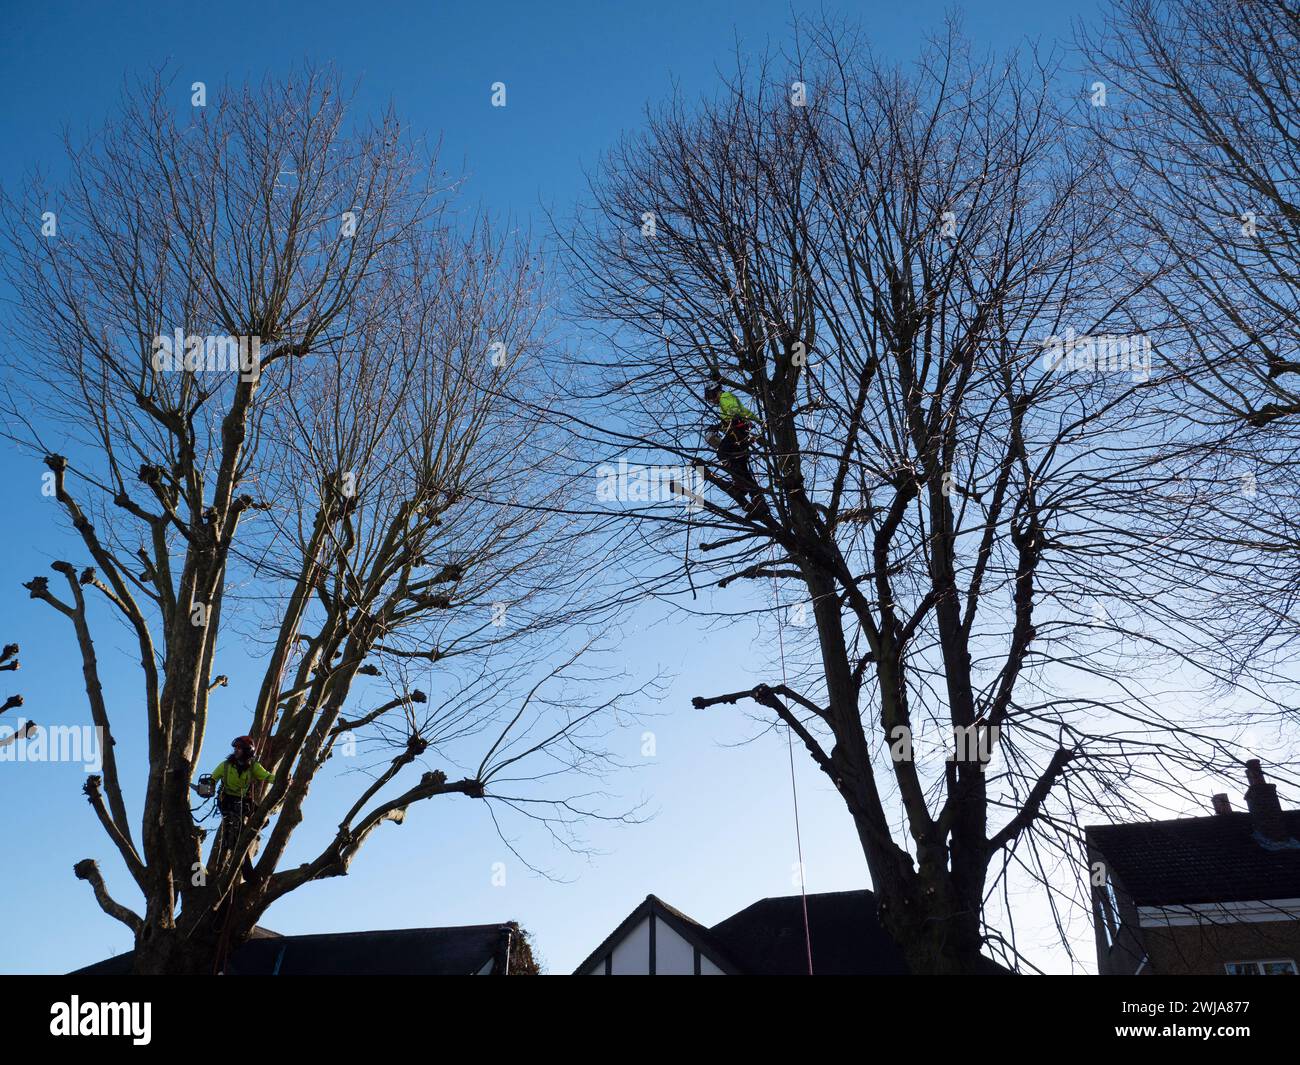 Tree surgeons, pollarding, pruning trees in North London street in the UK Stock Photo